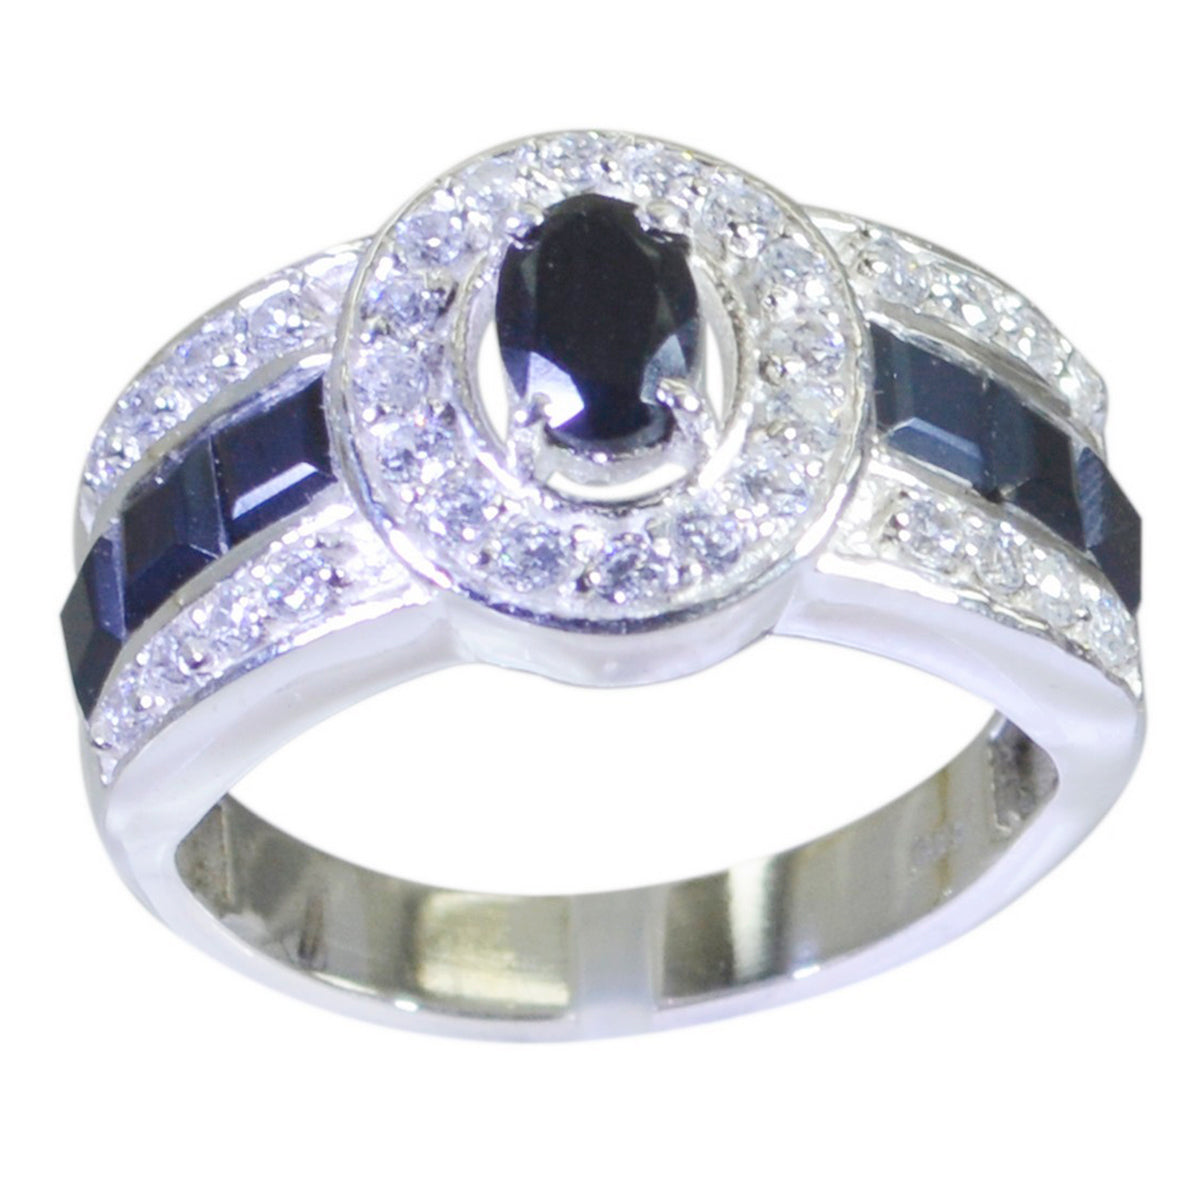 Riyo Designer Gems Black Onyx Sterling Silver Rings Jewelry Designs